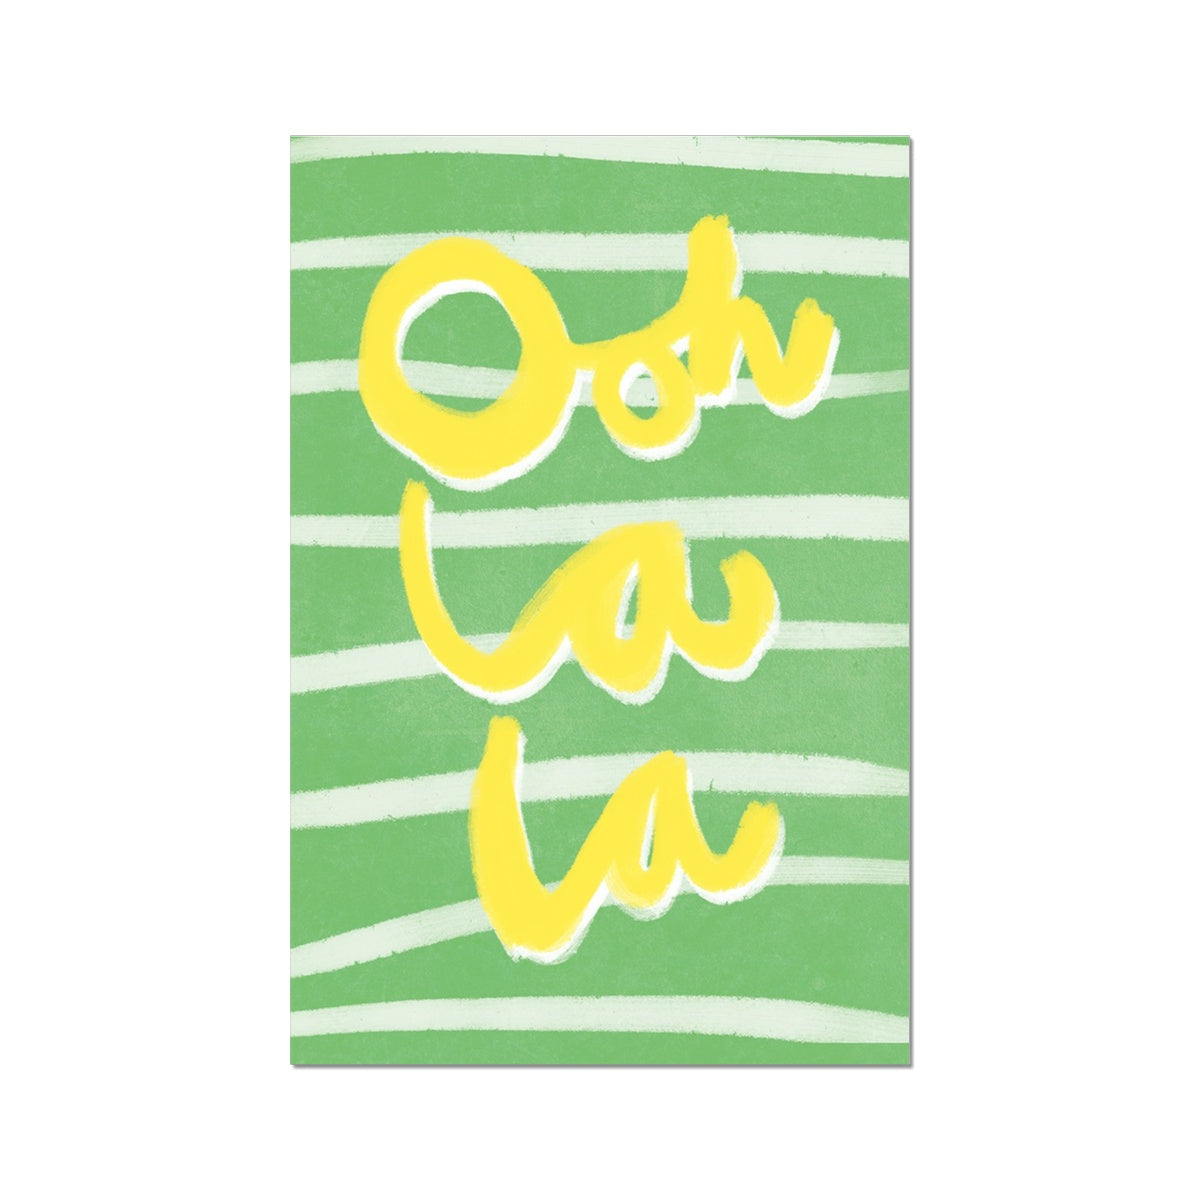 Ooh La La Art Print - Green, Yellow and White Fine Art Print